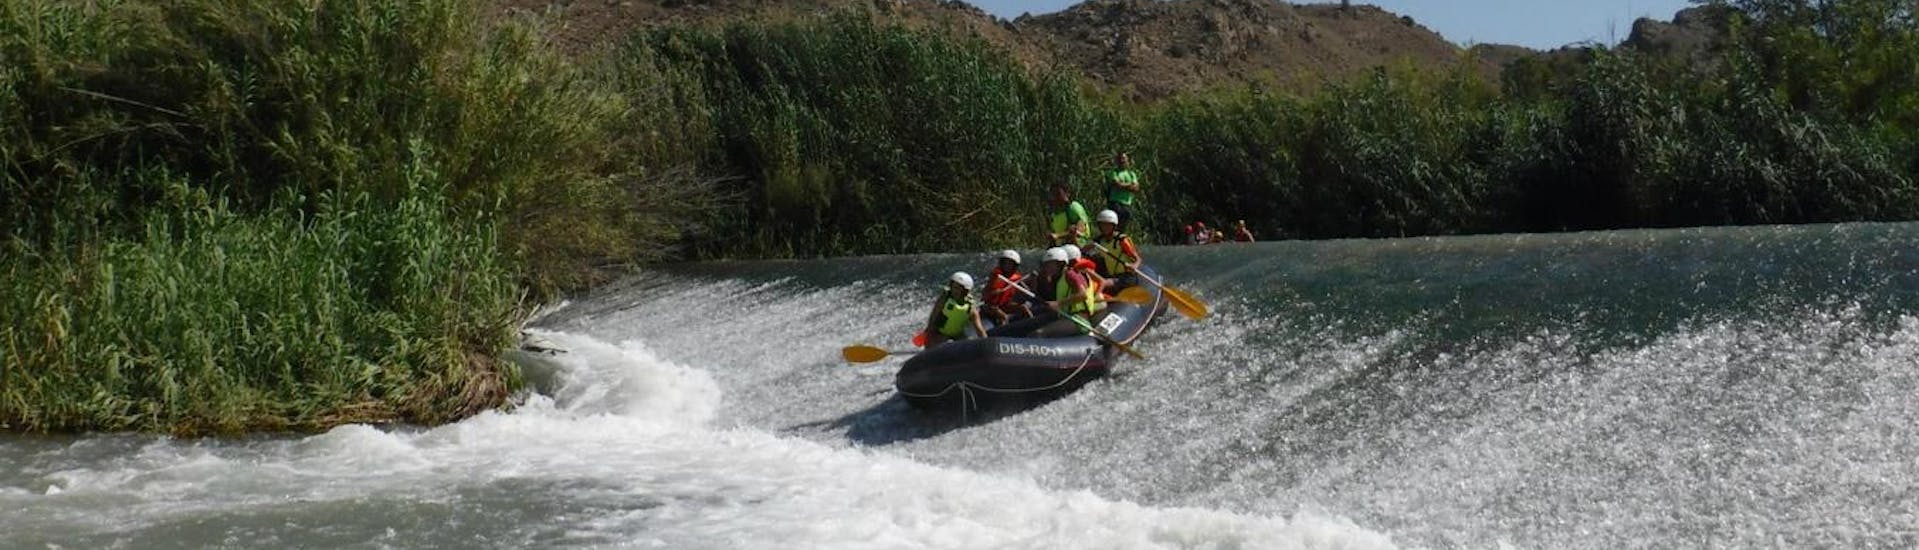 Rafting facile - Río Segura.